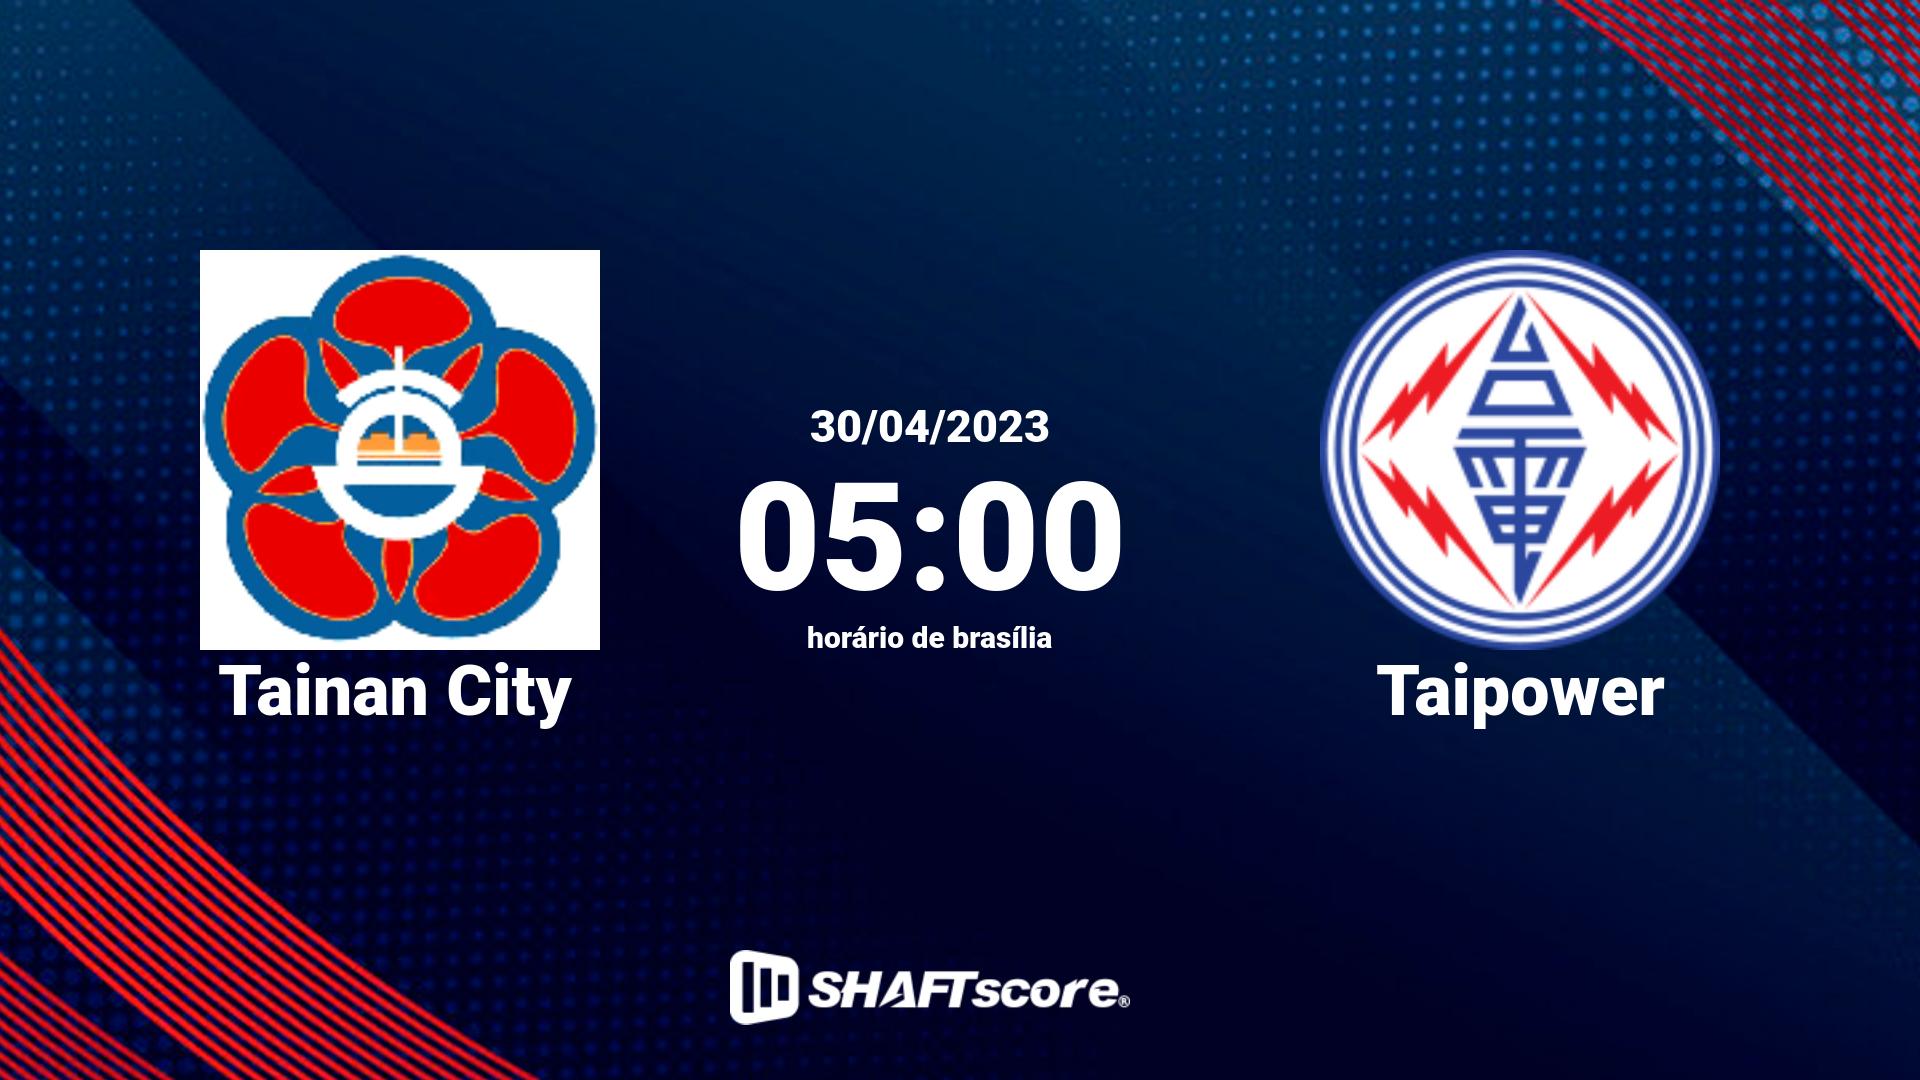 Estatísticas do jogo Tainan City vs Taipower 30.04 05:00